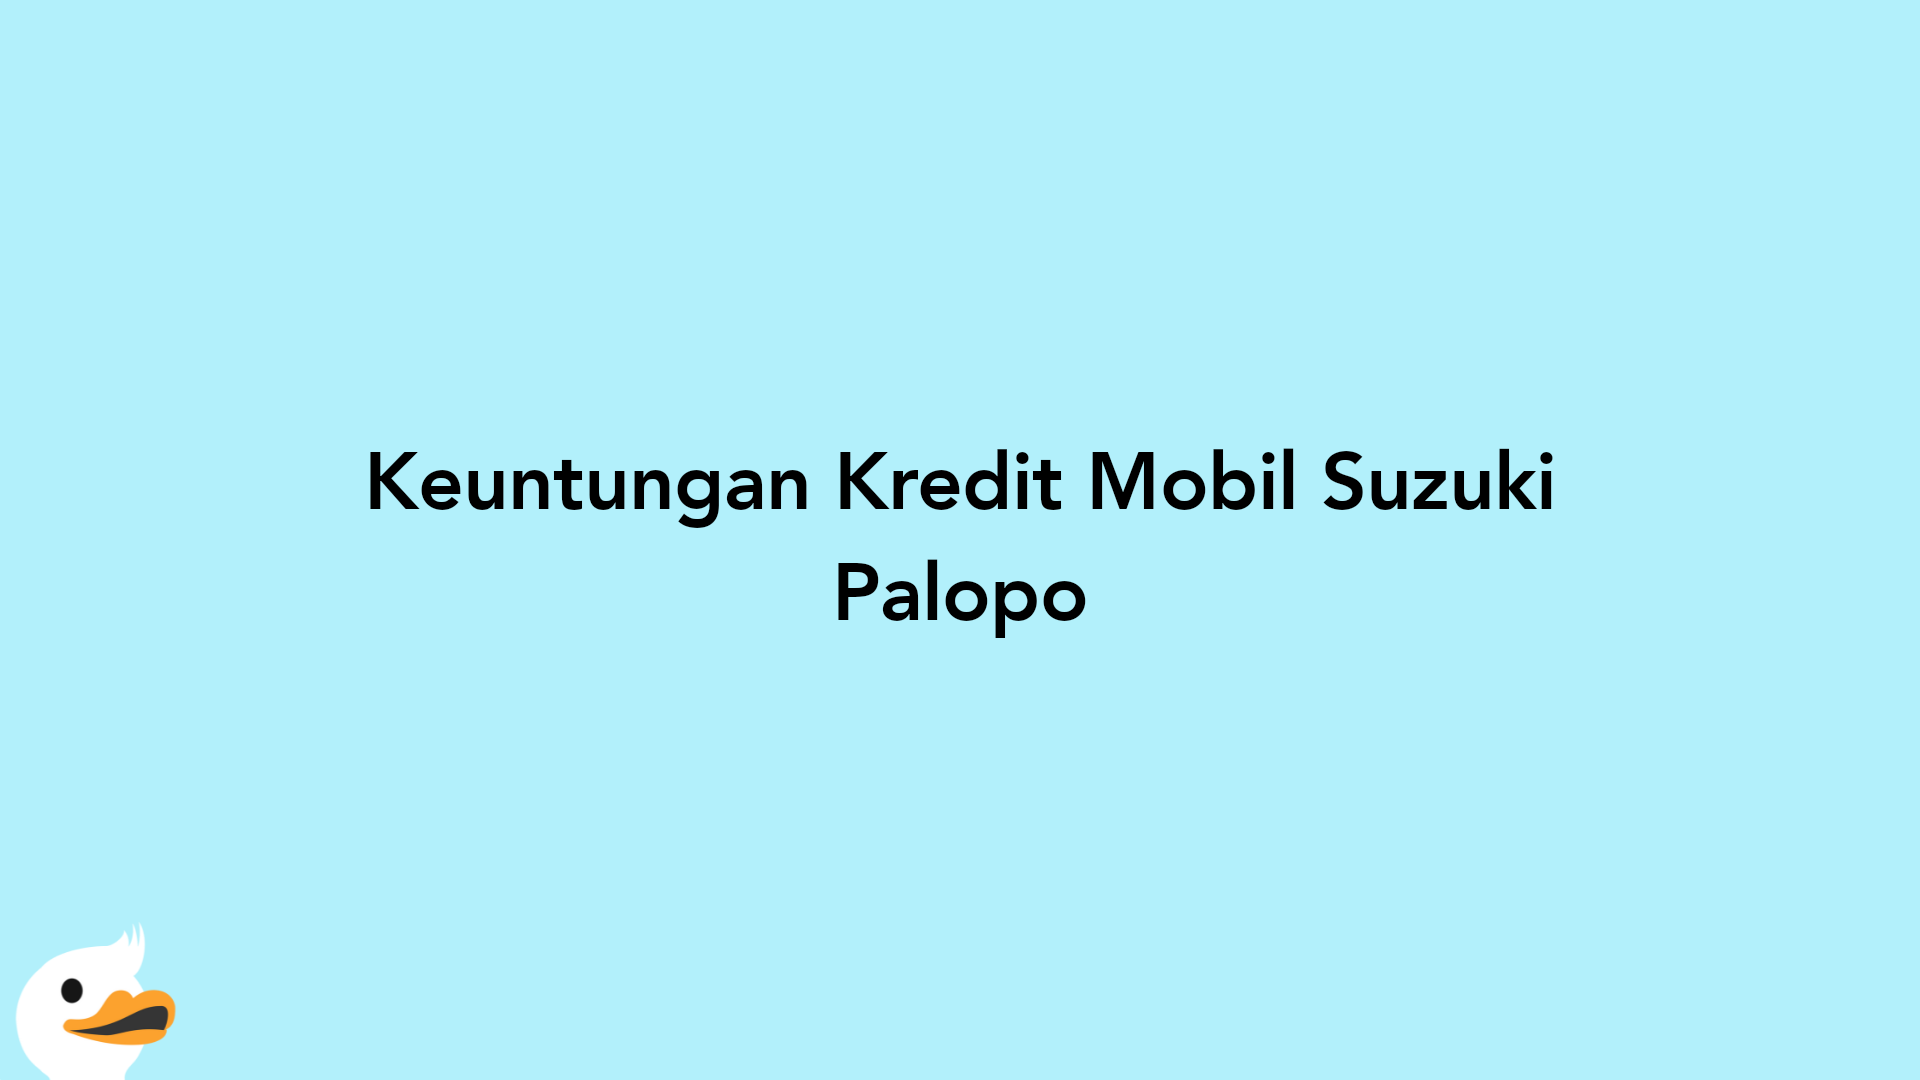 Keuntungan Kredit Mobil Suzuki Palopo